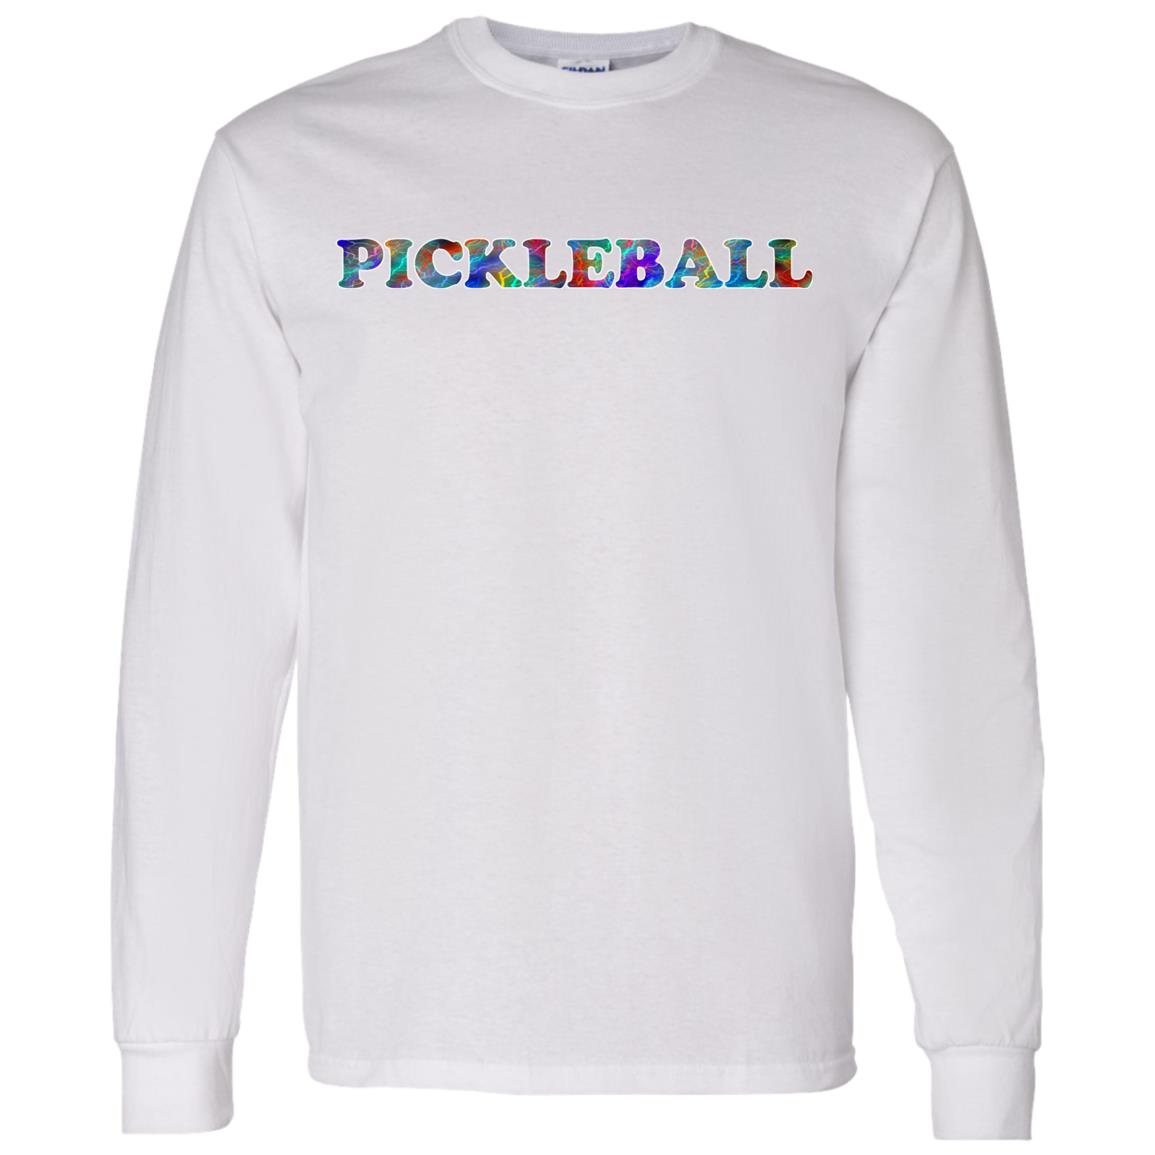 Pickleball Long Sleeve T-Shirt